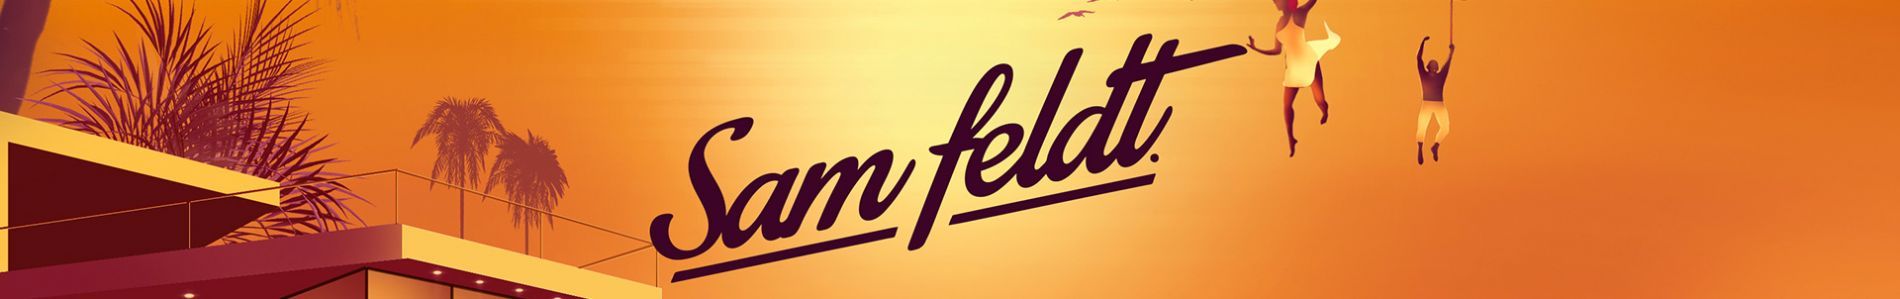 Win a limited edition Sam Feldt vinyl record!